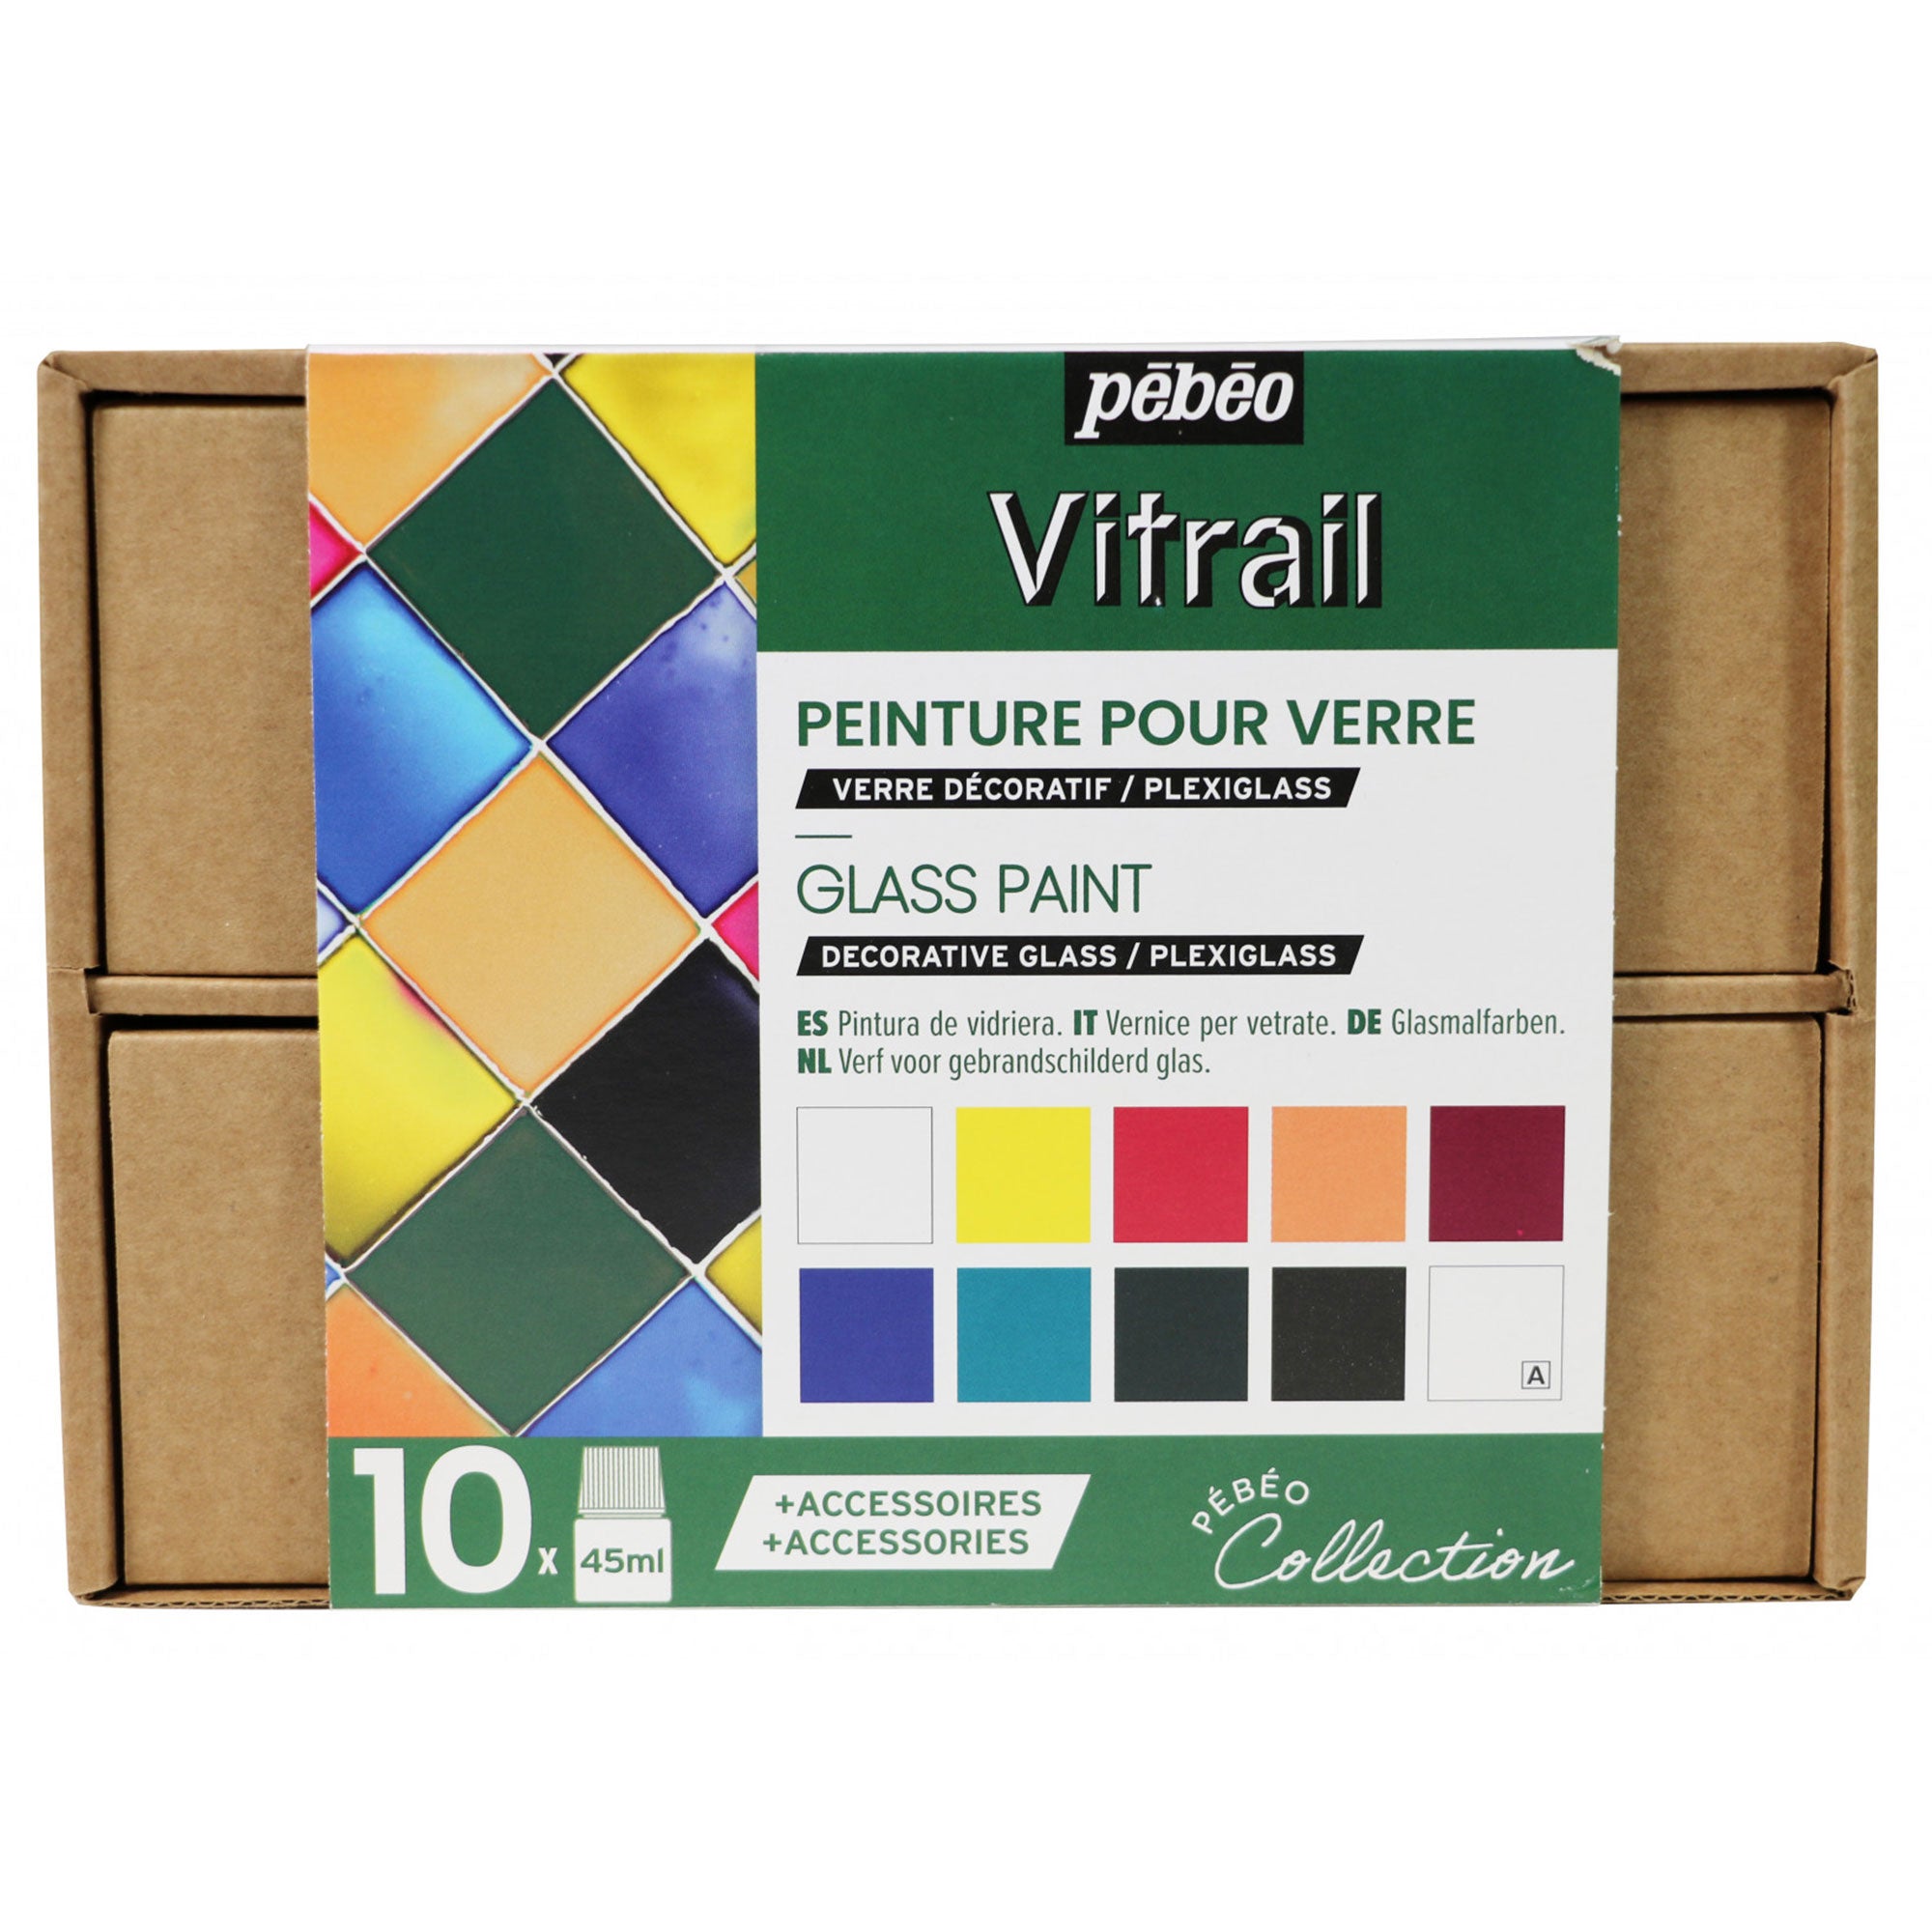 Pebeo Vitrail Glass Painting Set - 10 x 45ml Box